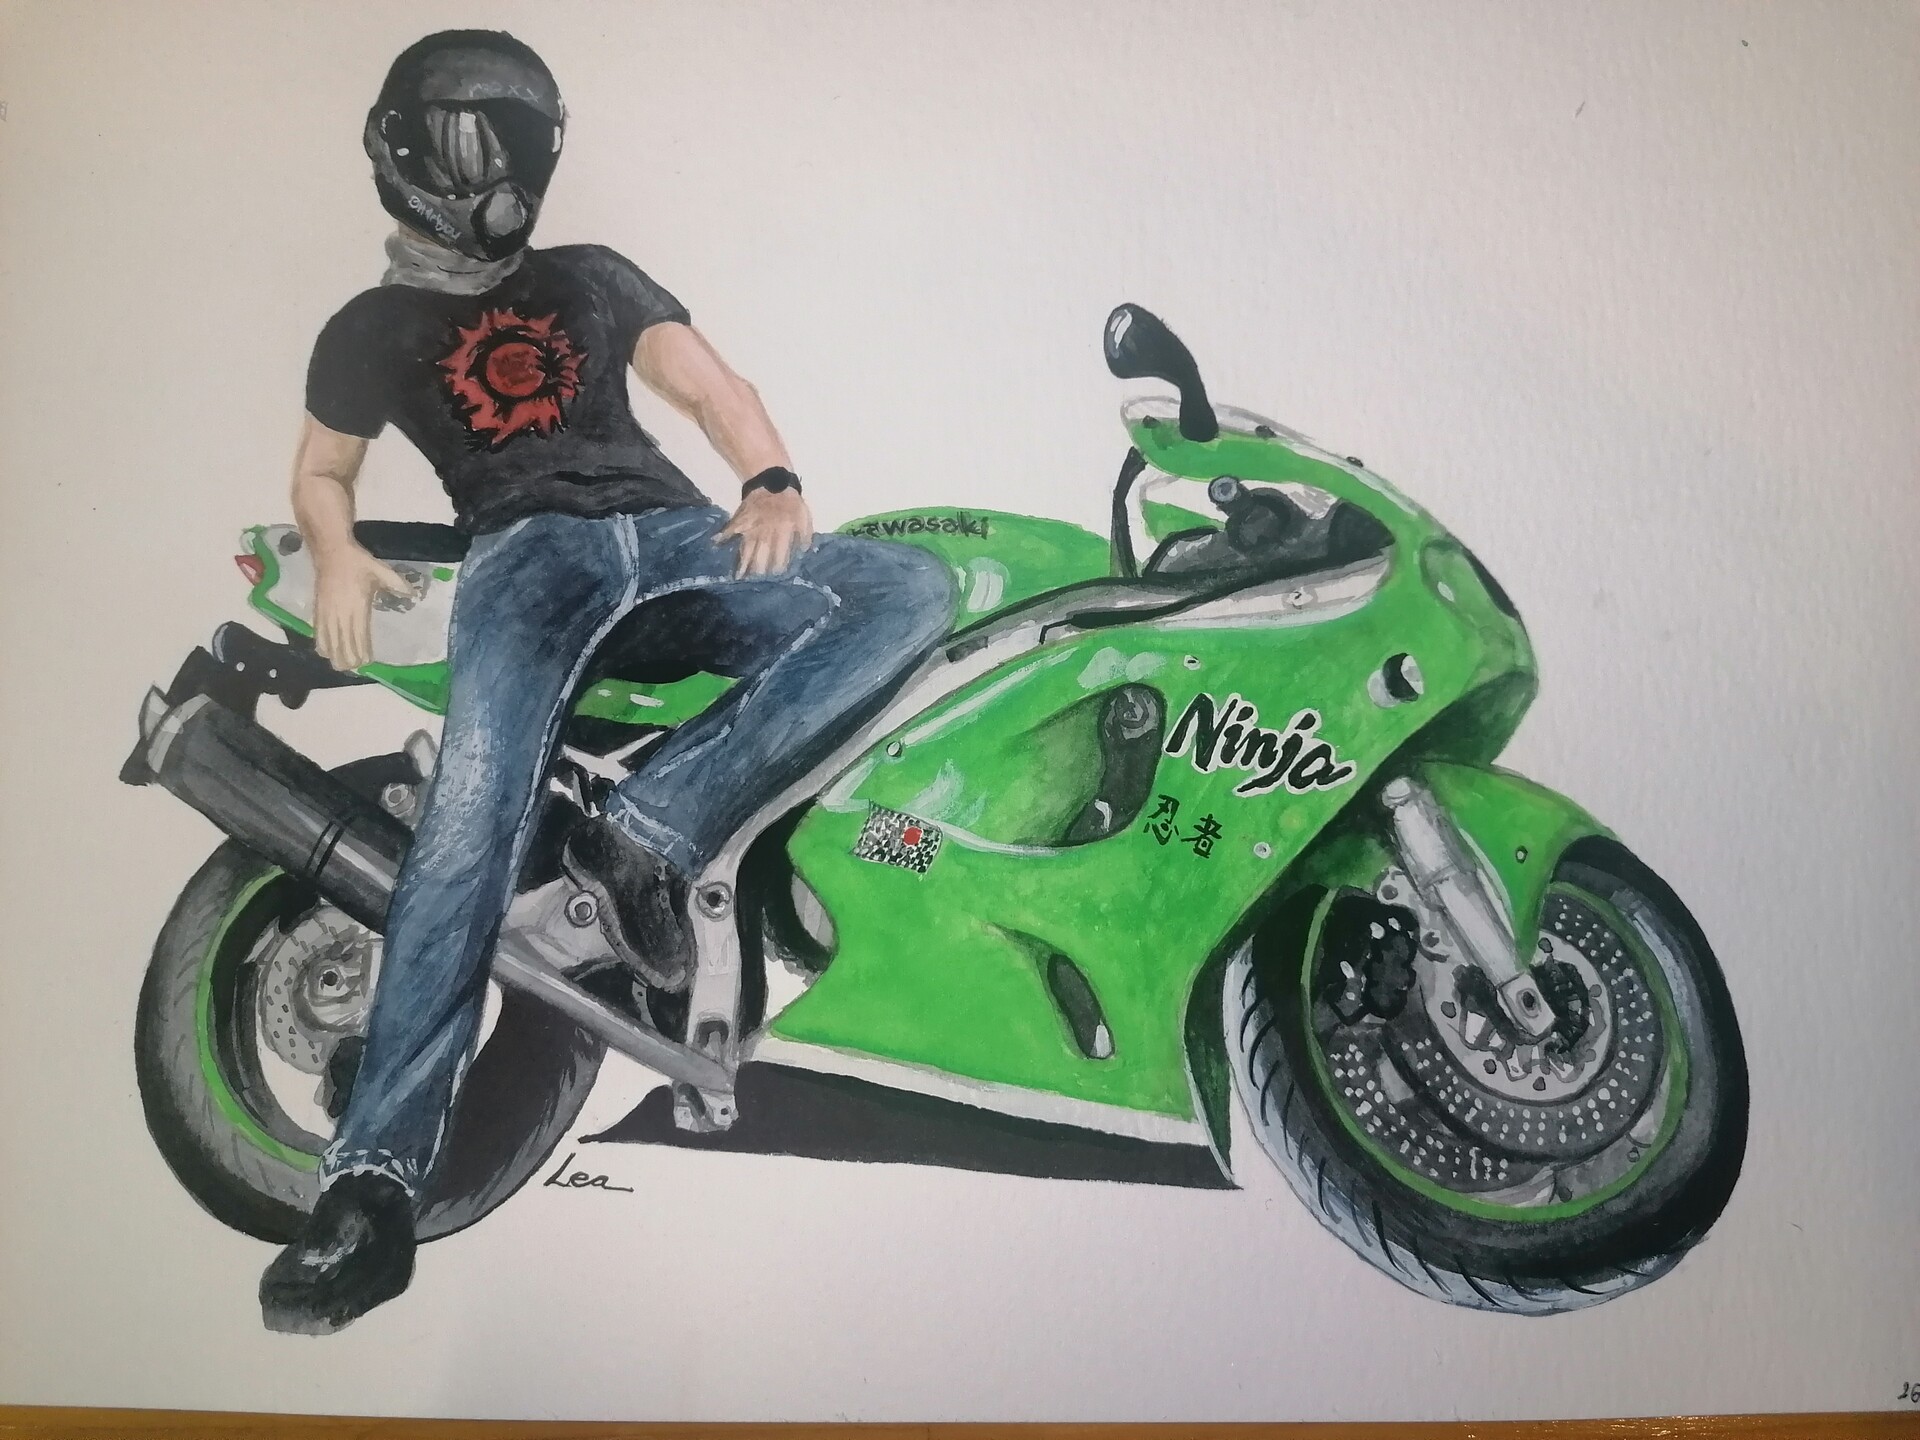 Kawasaki ninja zx 10r drawing | How to draw bike | uk07 rider @uk07rider -  YouTube